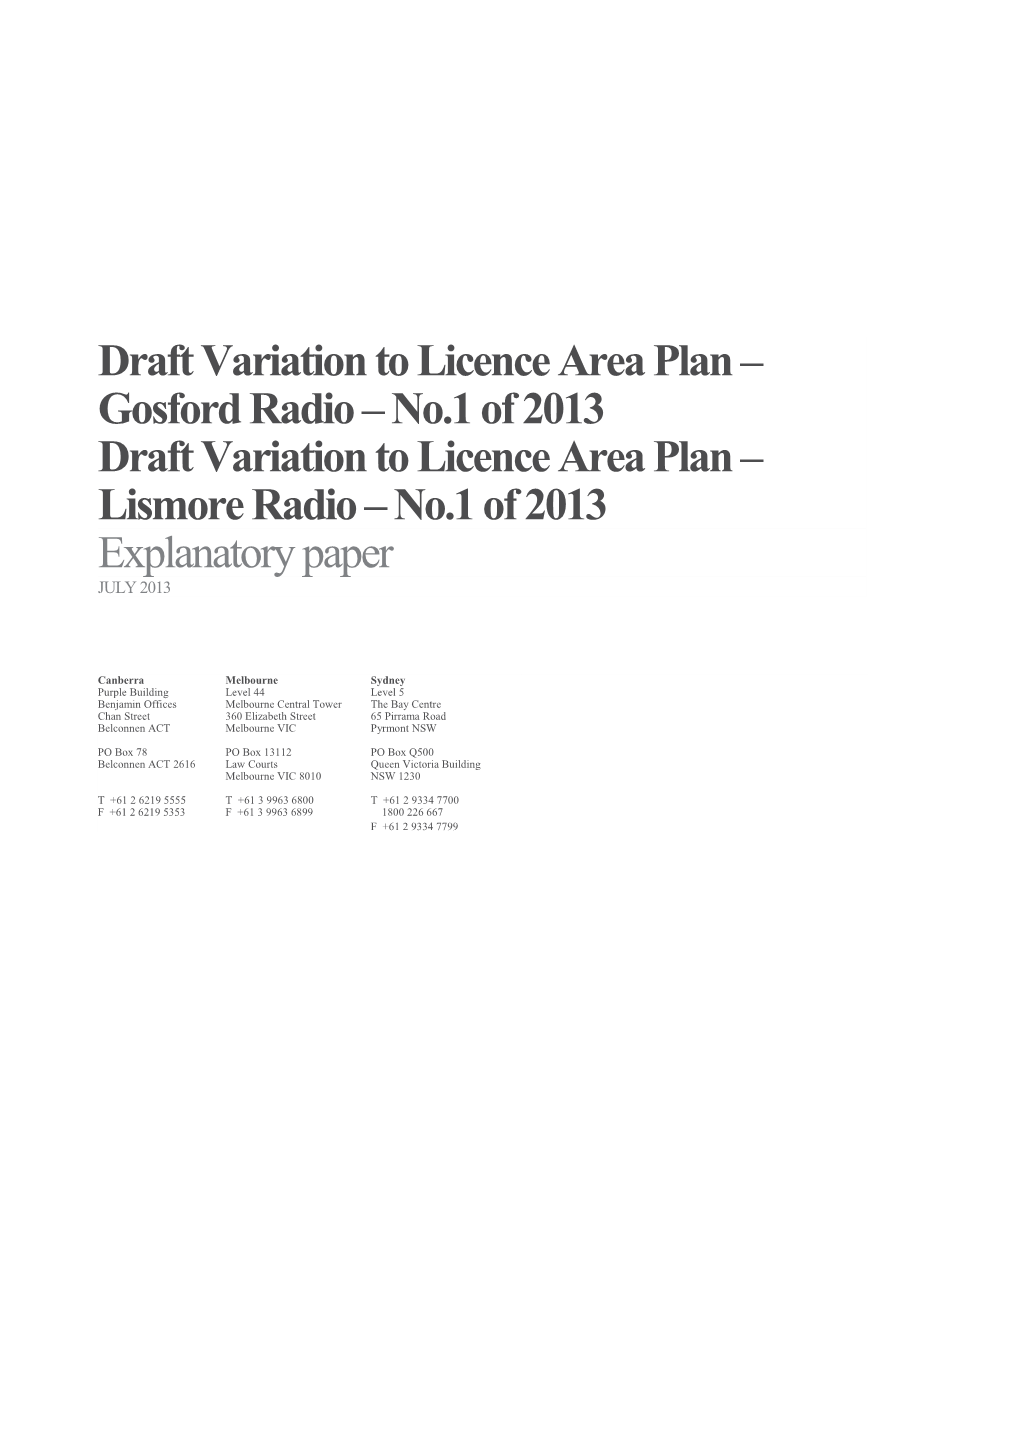 EP to Draft Variation to LAPS - Gosford Radio & Lismore Radio